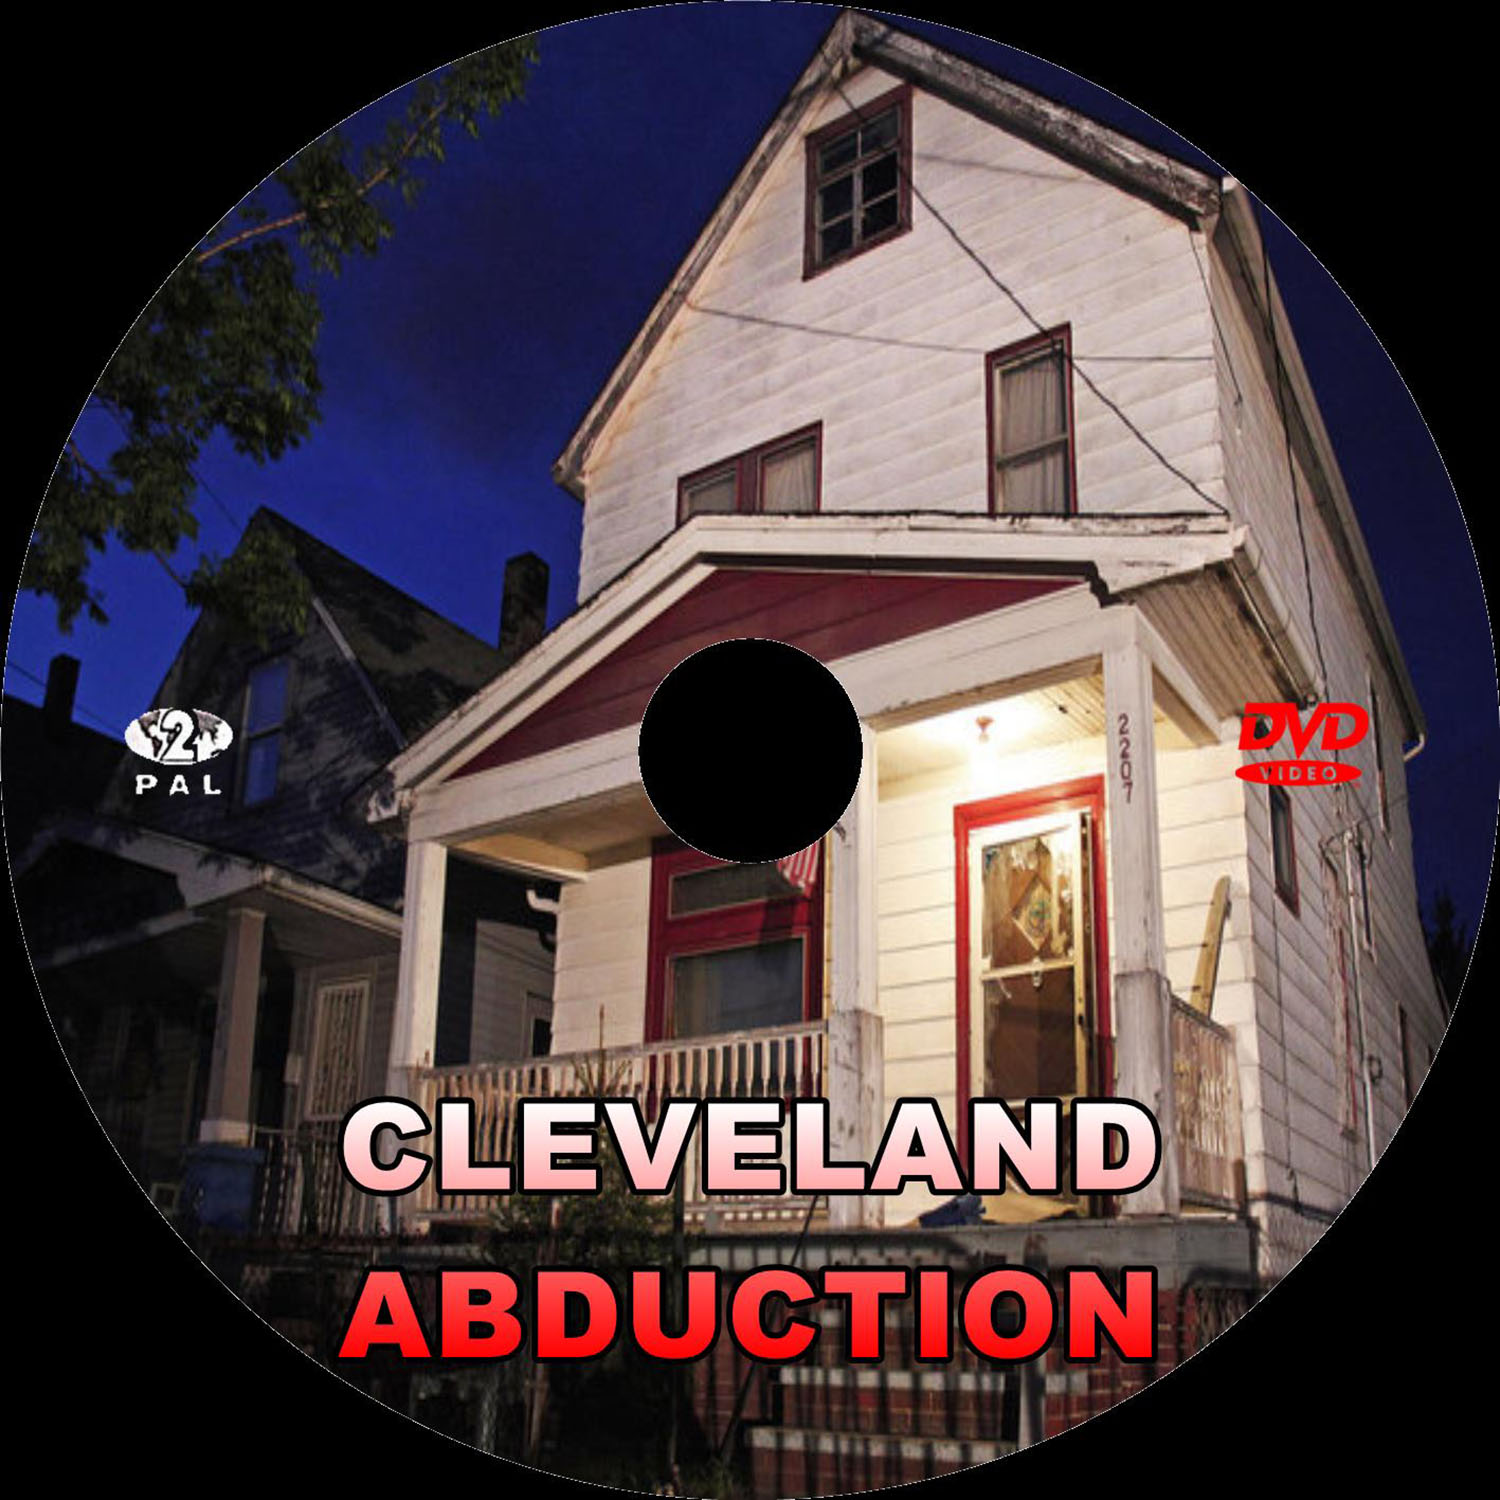 Cleveland abduction custom